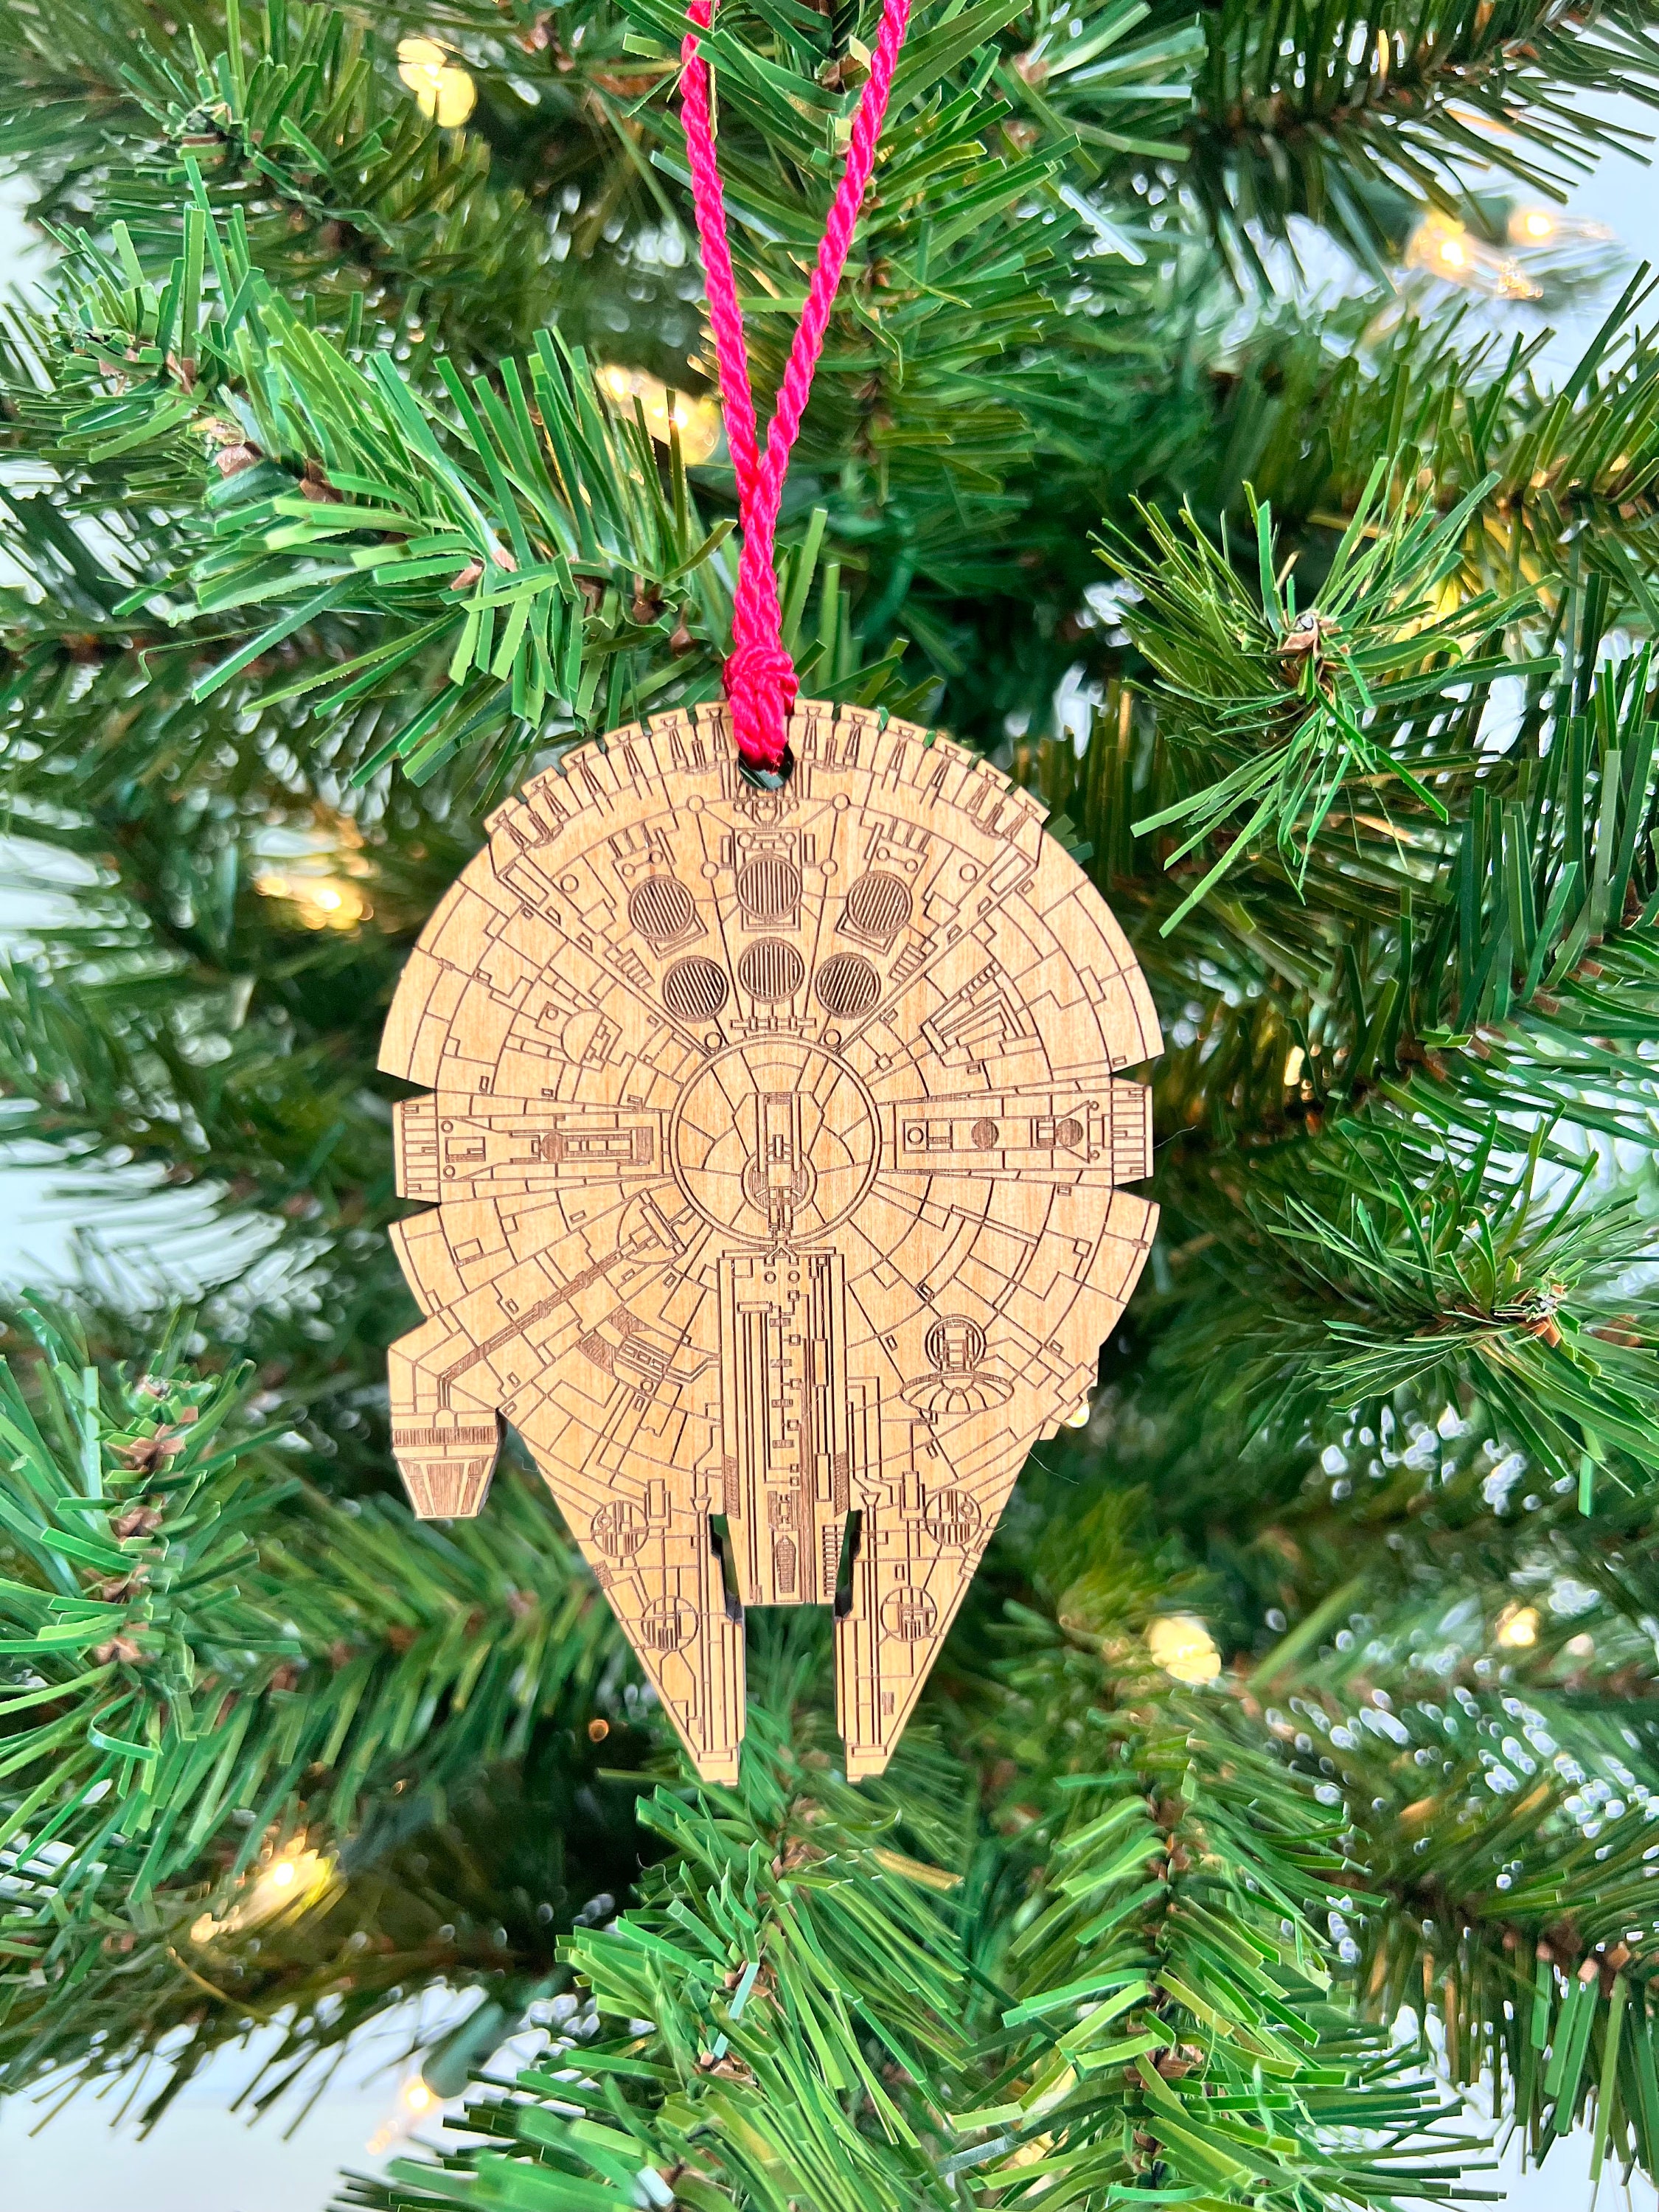 Star Wars Christmas Tree Decorations / Ornaments (Gold) - Numskull